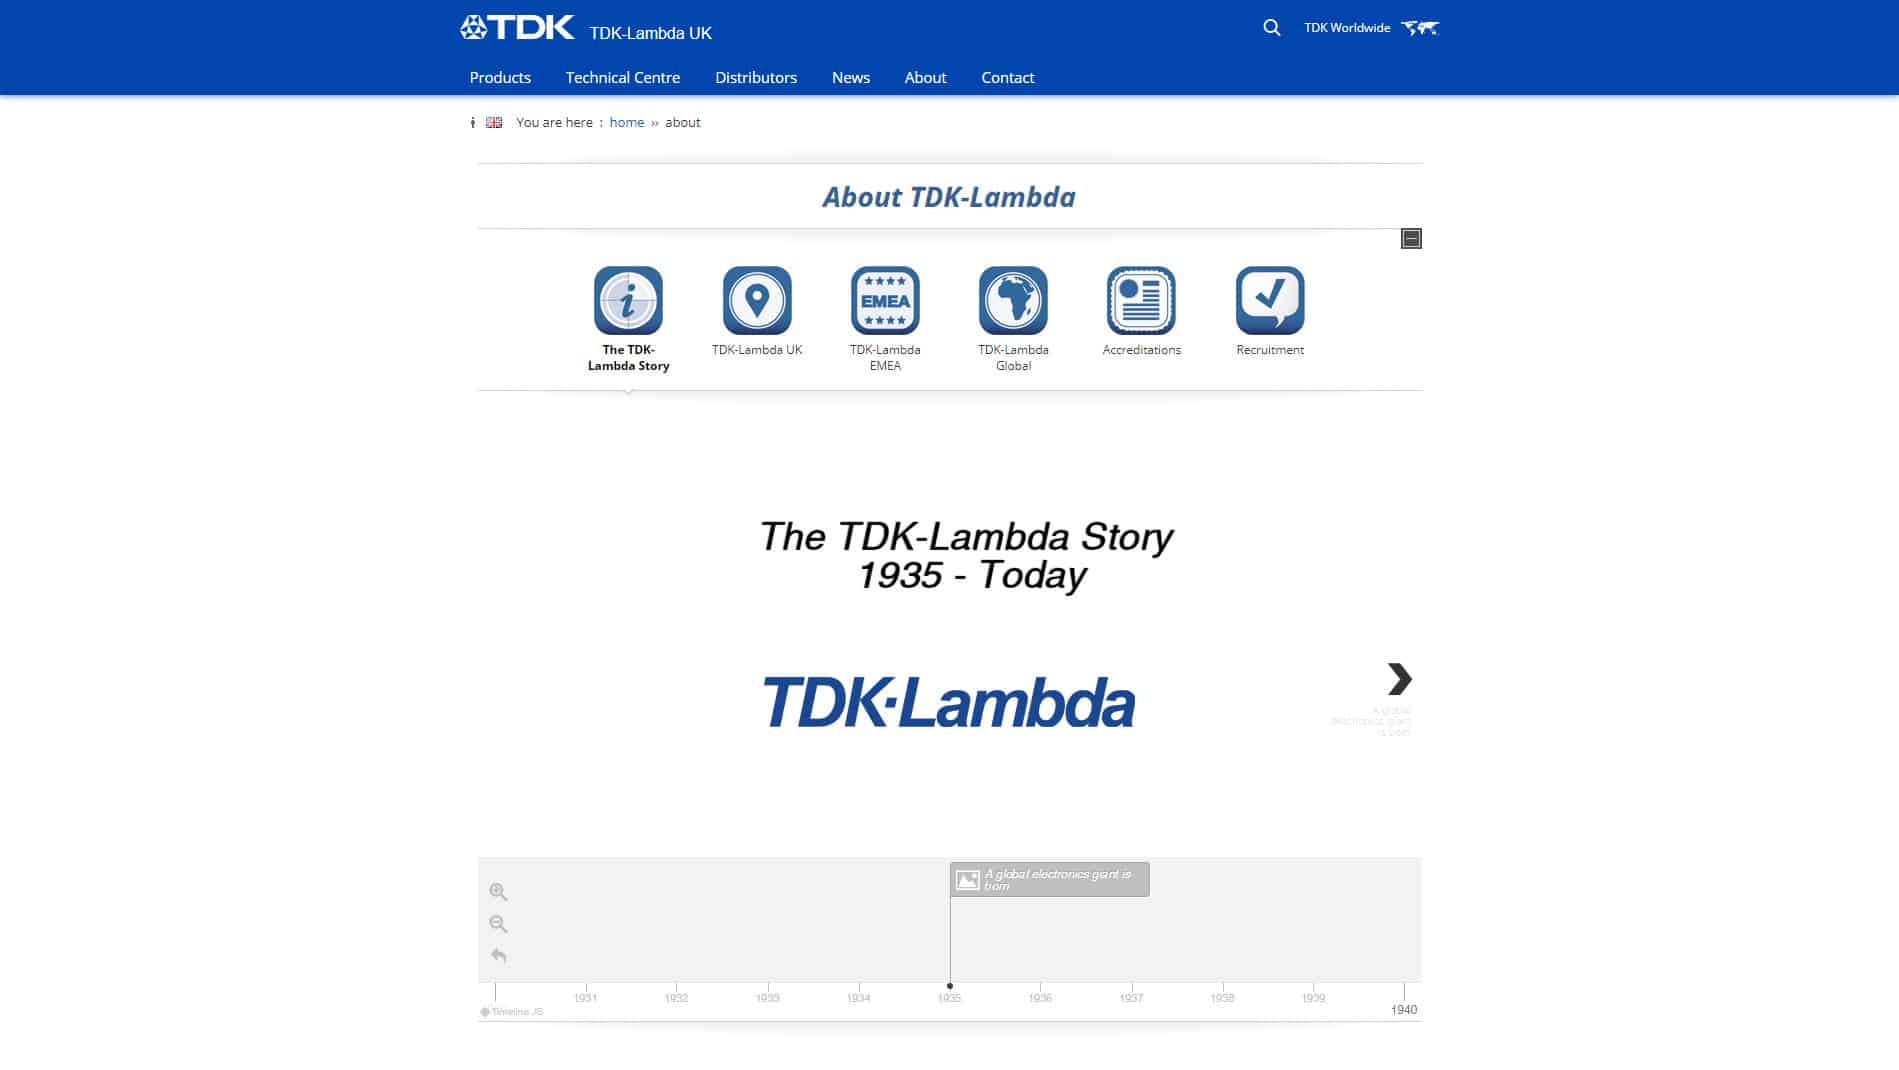 TDK-Lambda screenshot (click to enlarge)